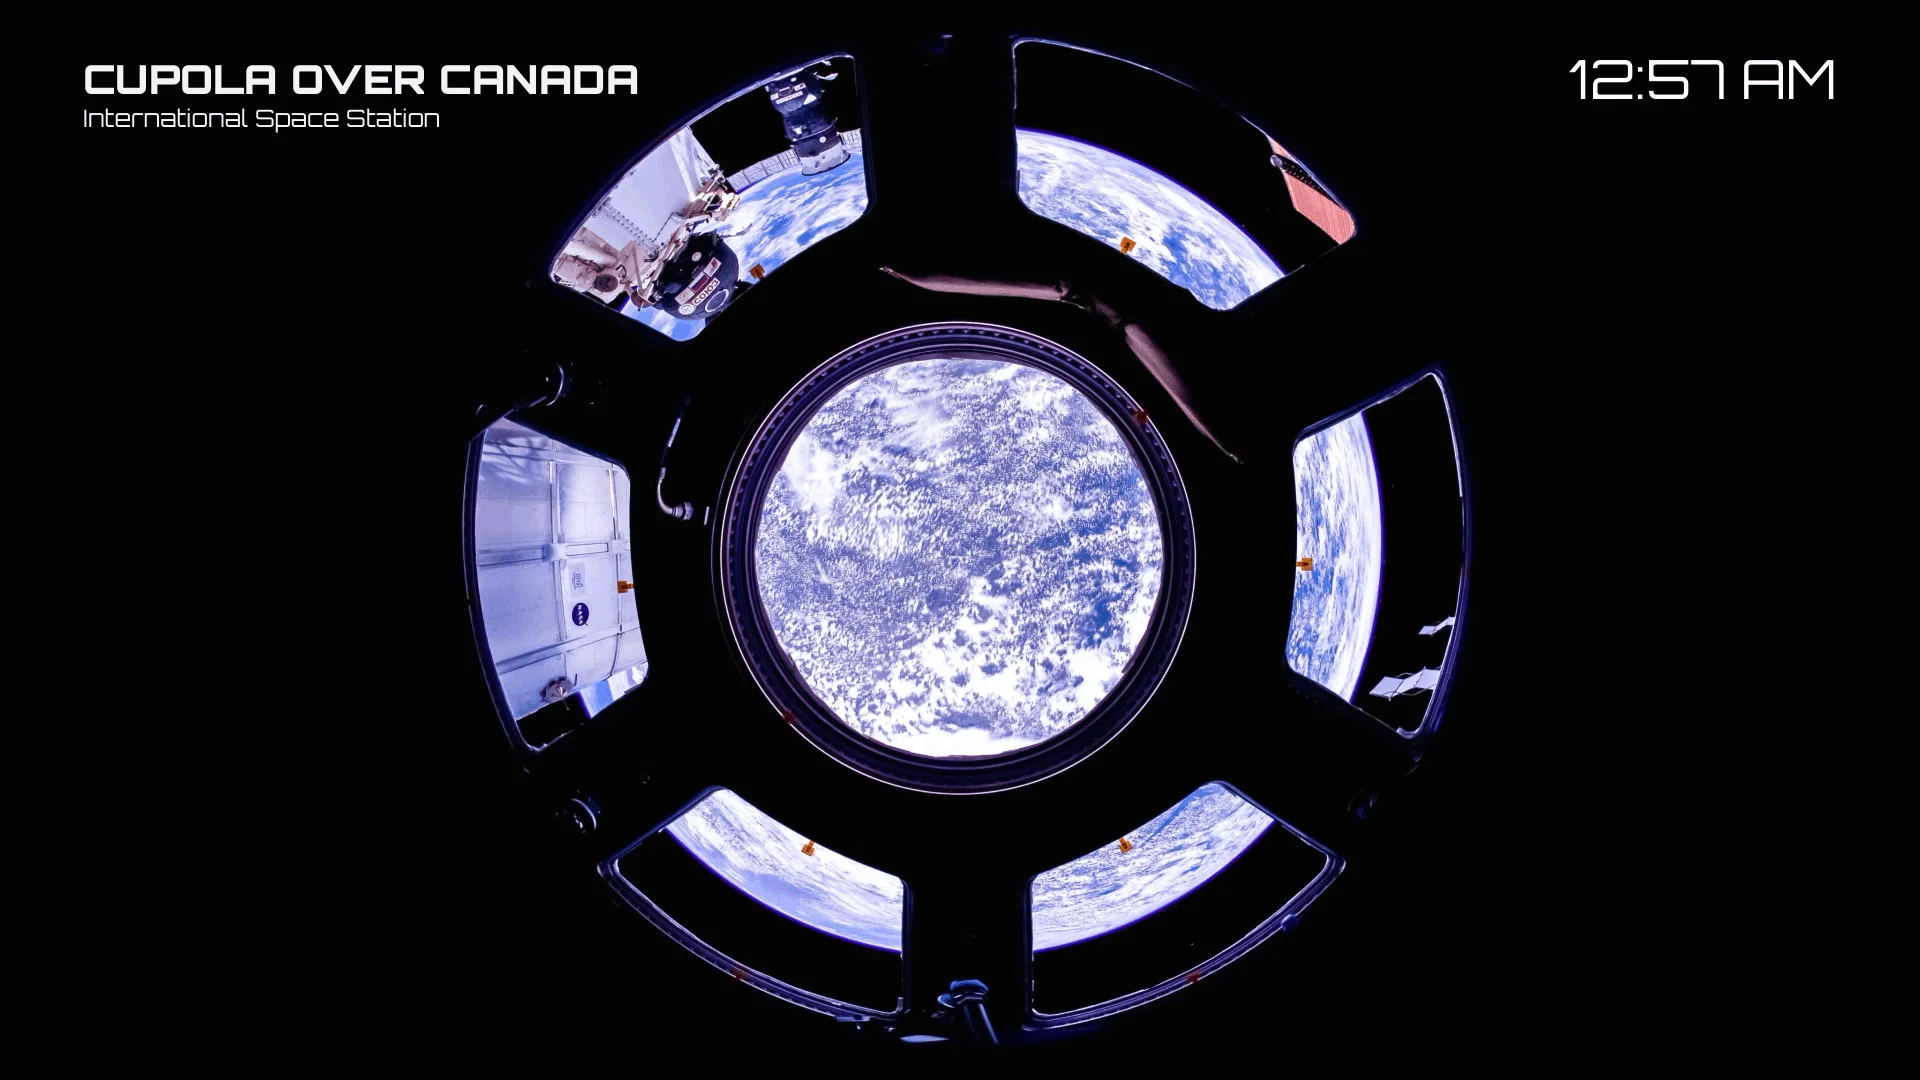 Canada through the ISS cupola window